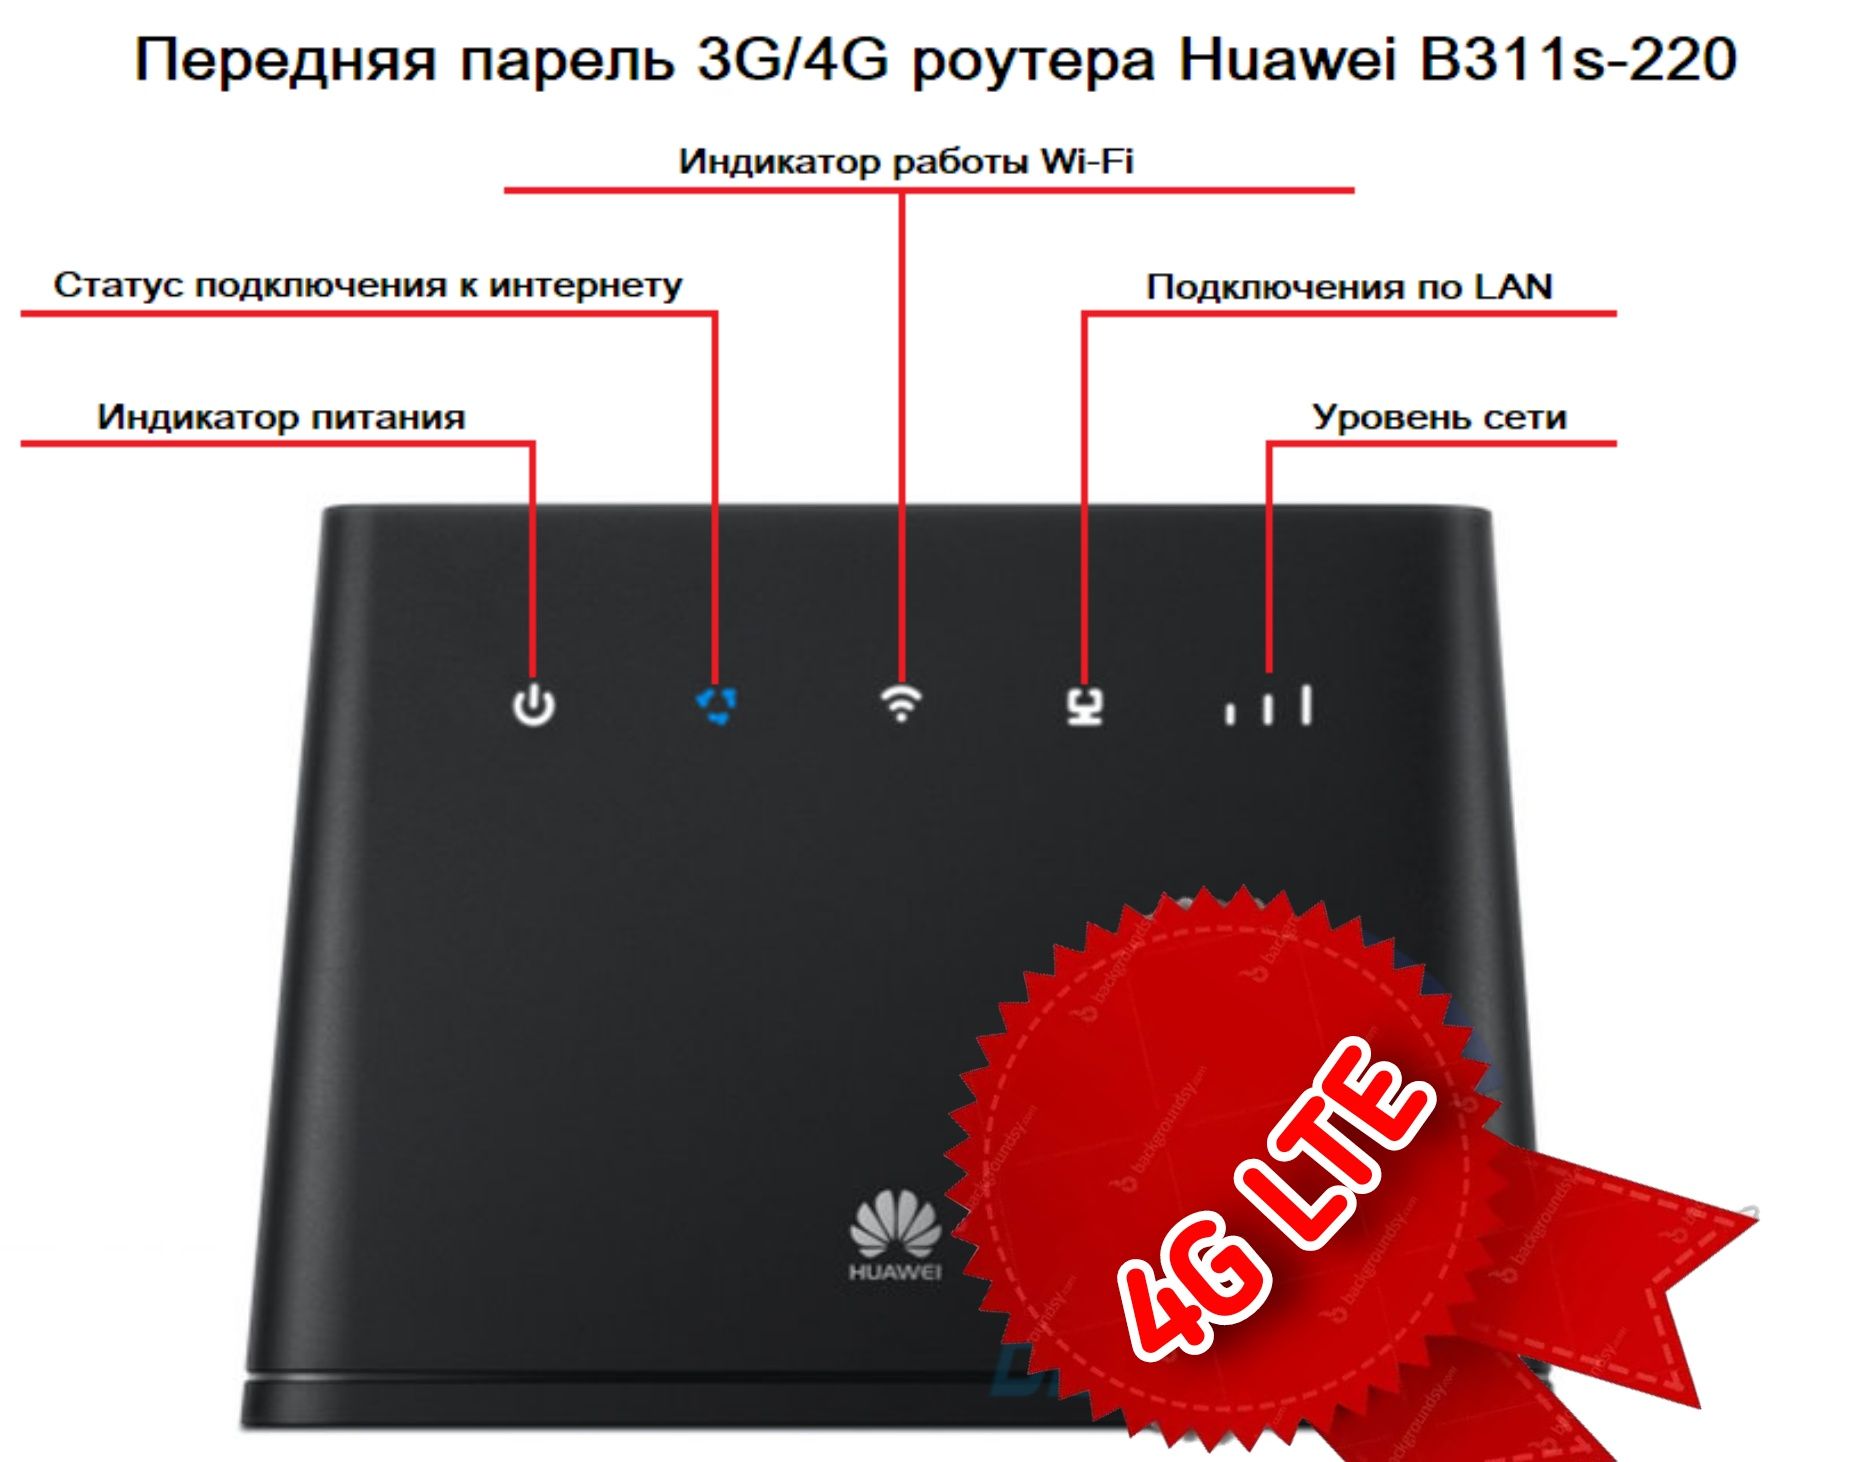 4G LTE комплект Huawei B311 антенна Agata F с высоким усилением 17 дб